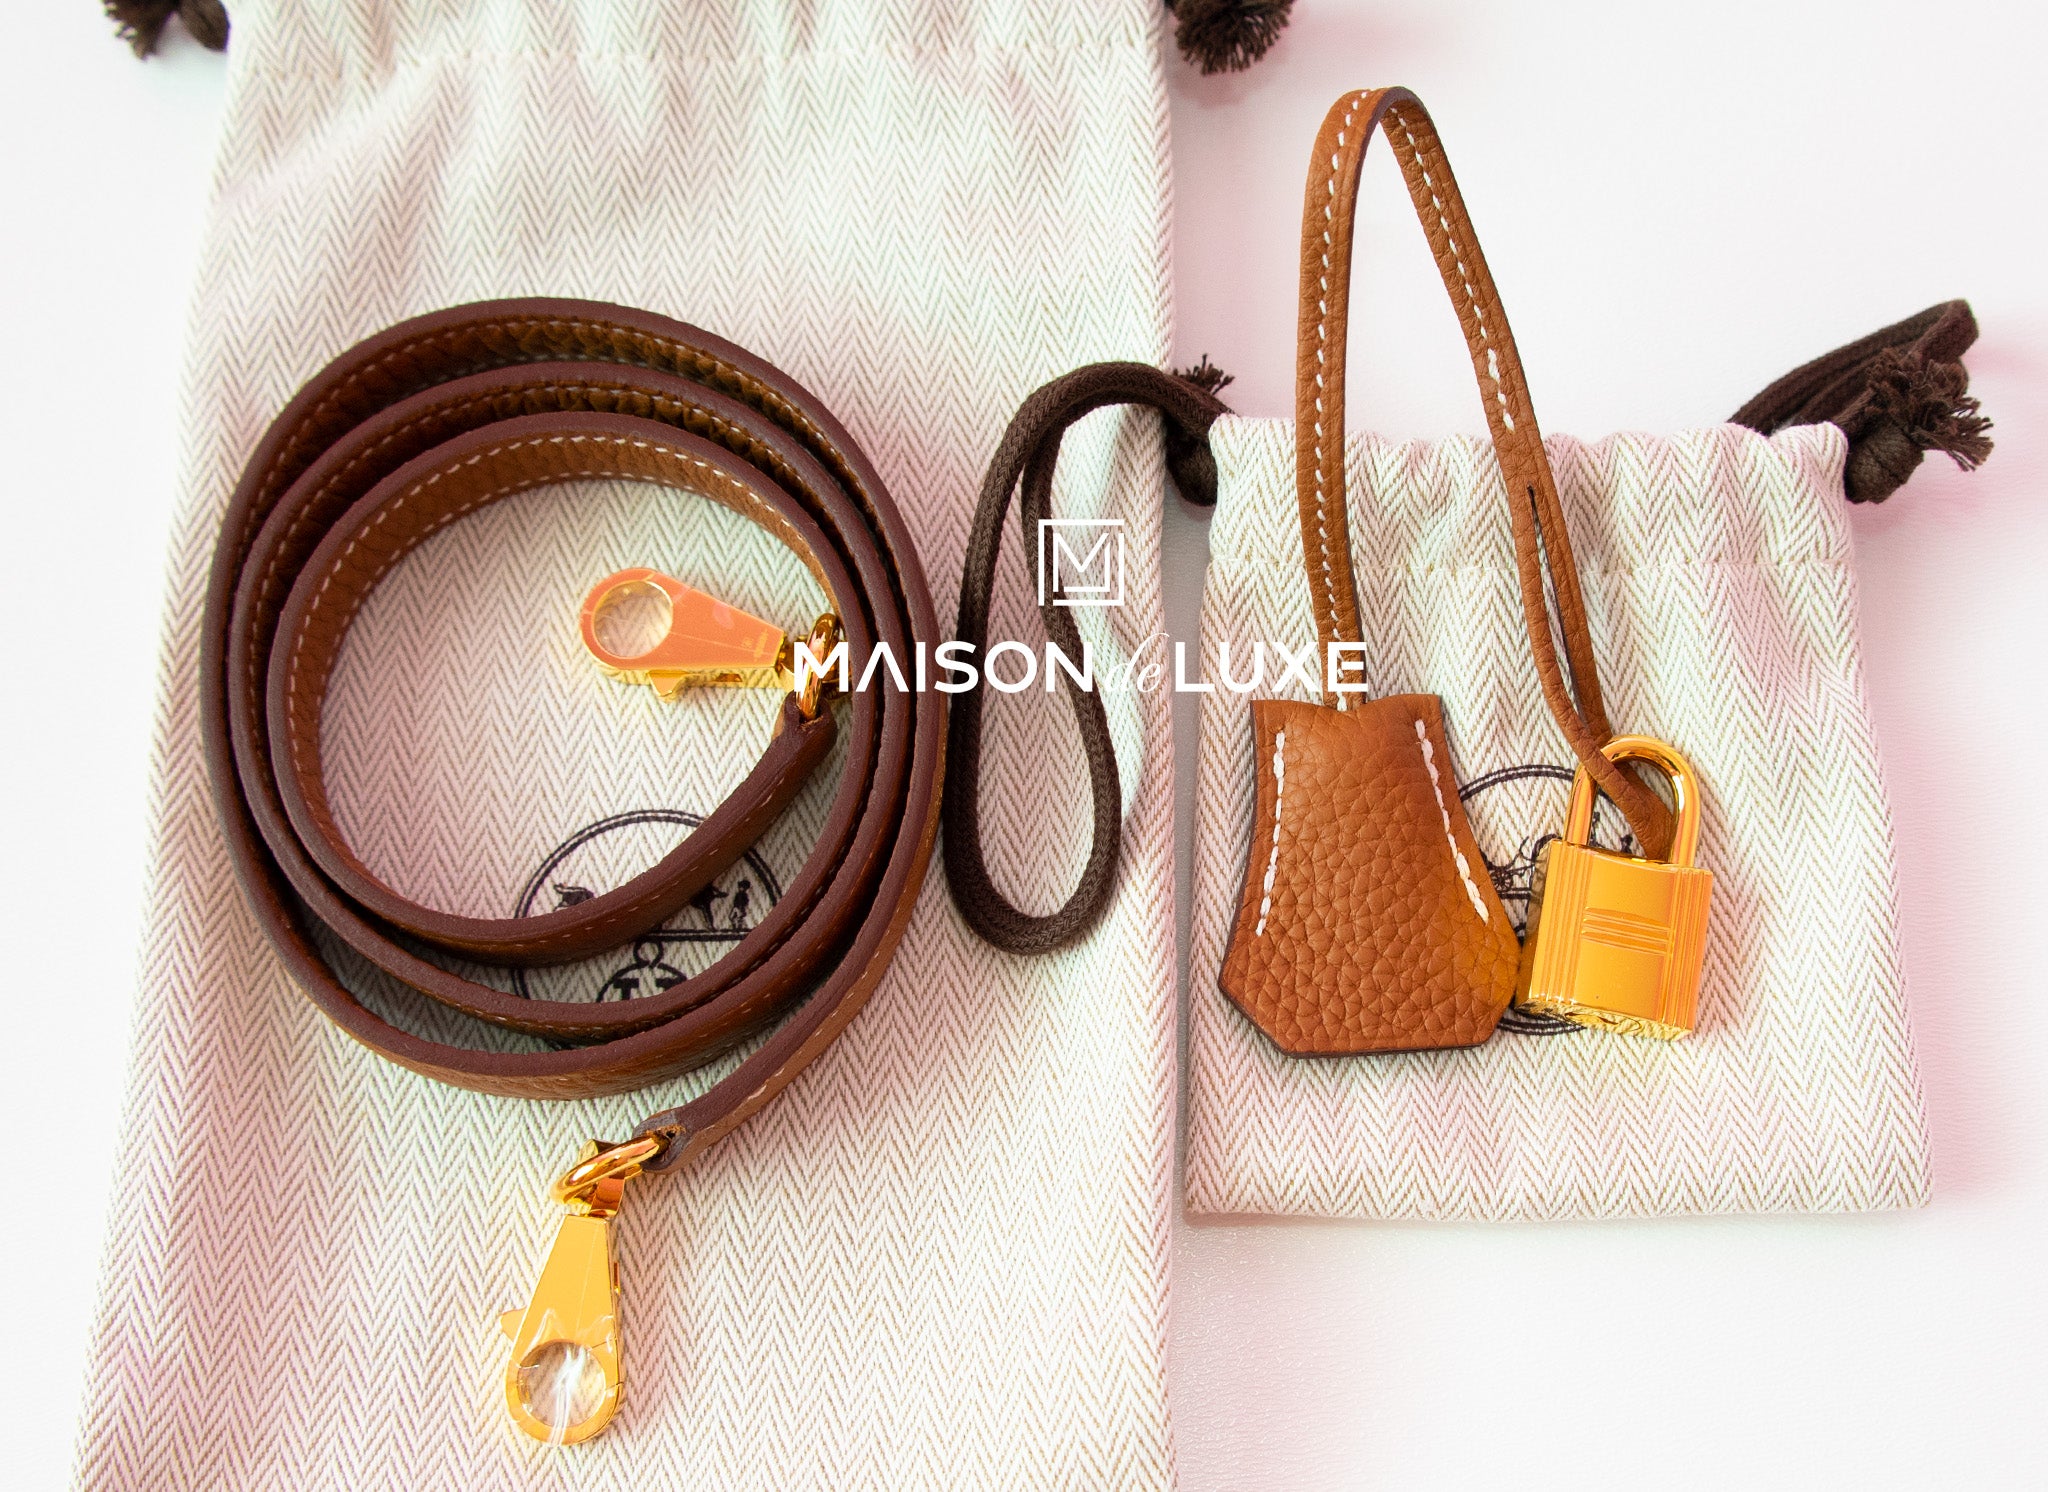 Hermes Kelly Handbag Orange Togo with Gold Hardware 28 Orange 20662137